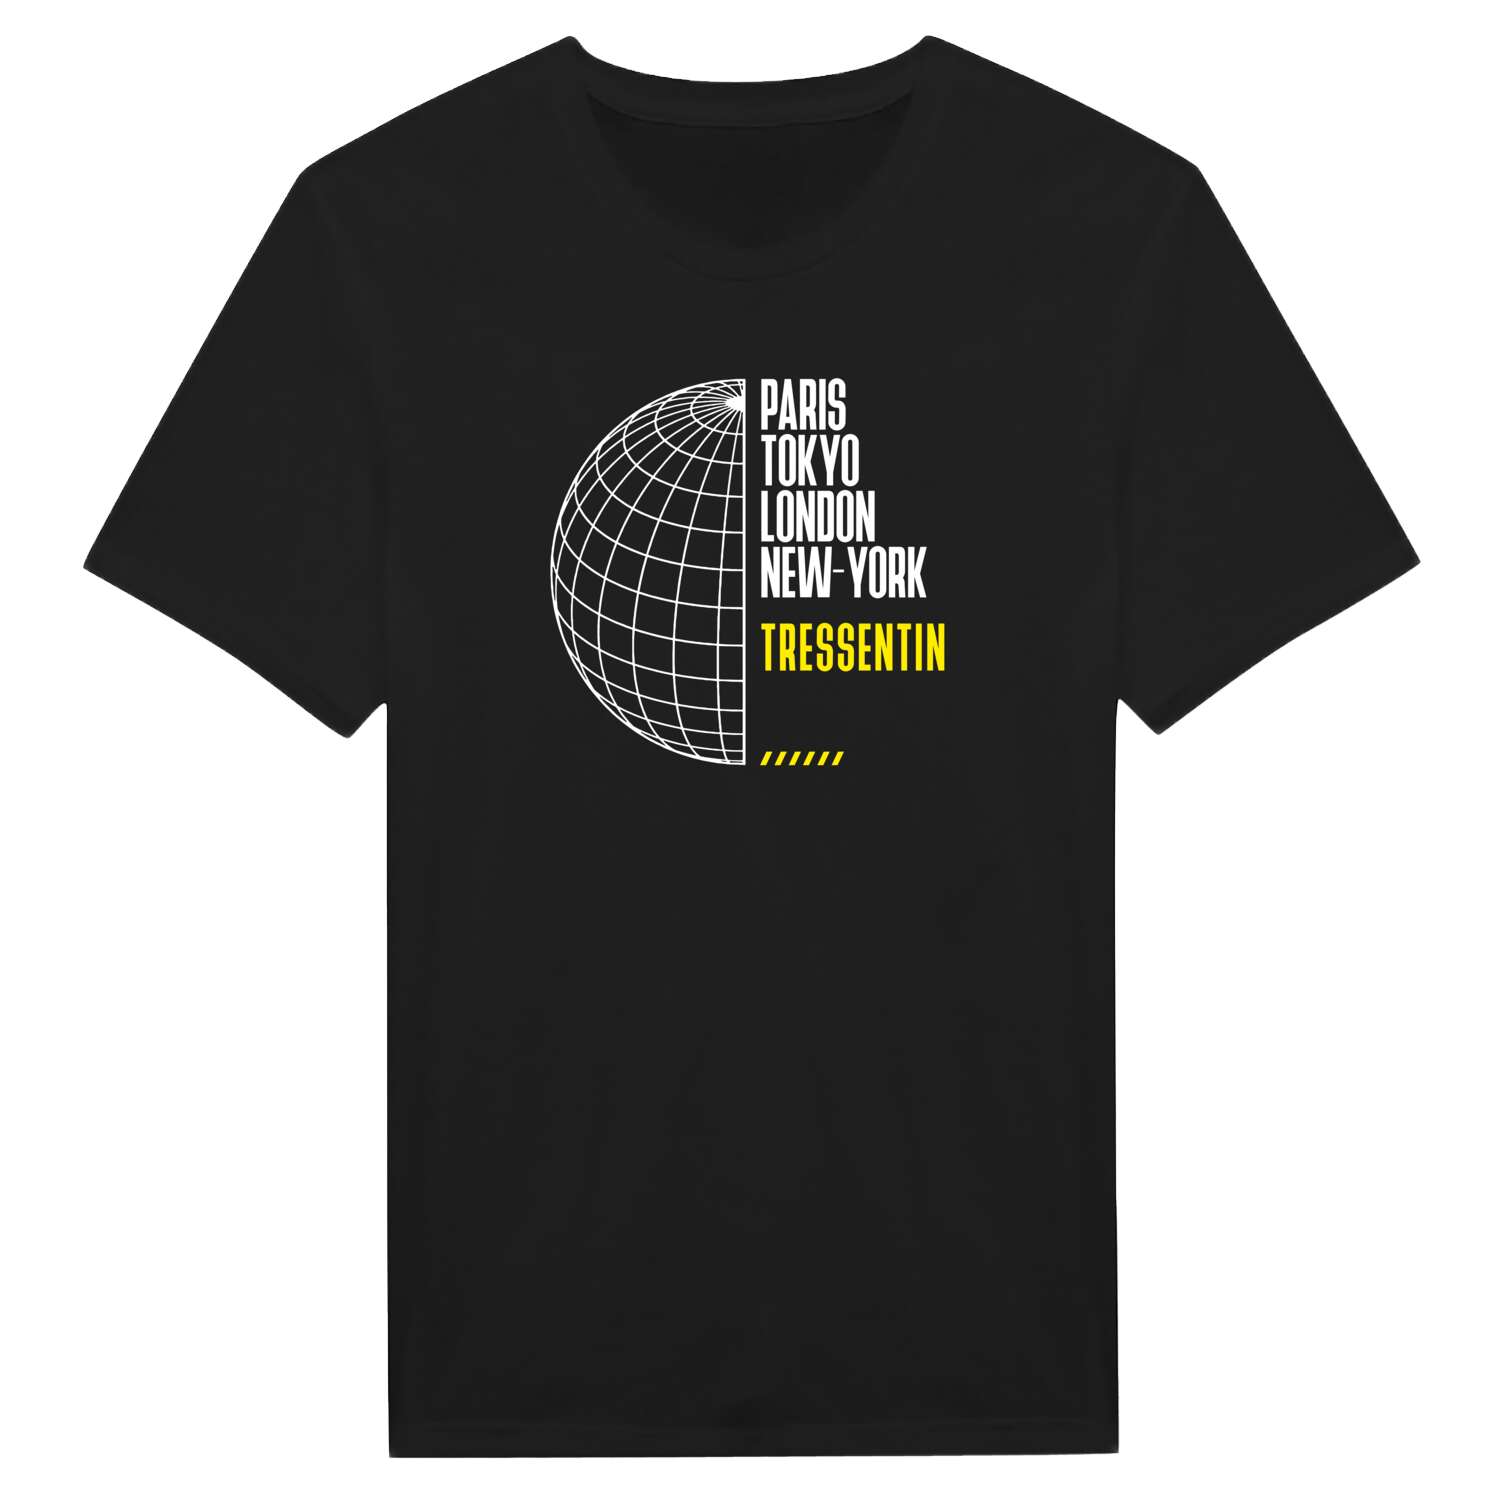 Tressentin T-Shirt »Paris Tokyo London«